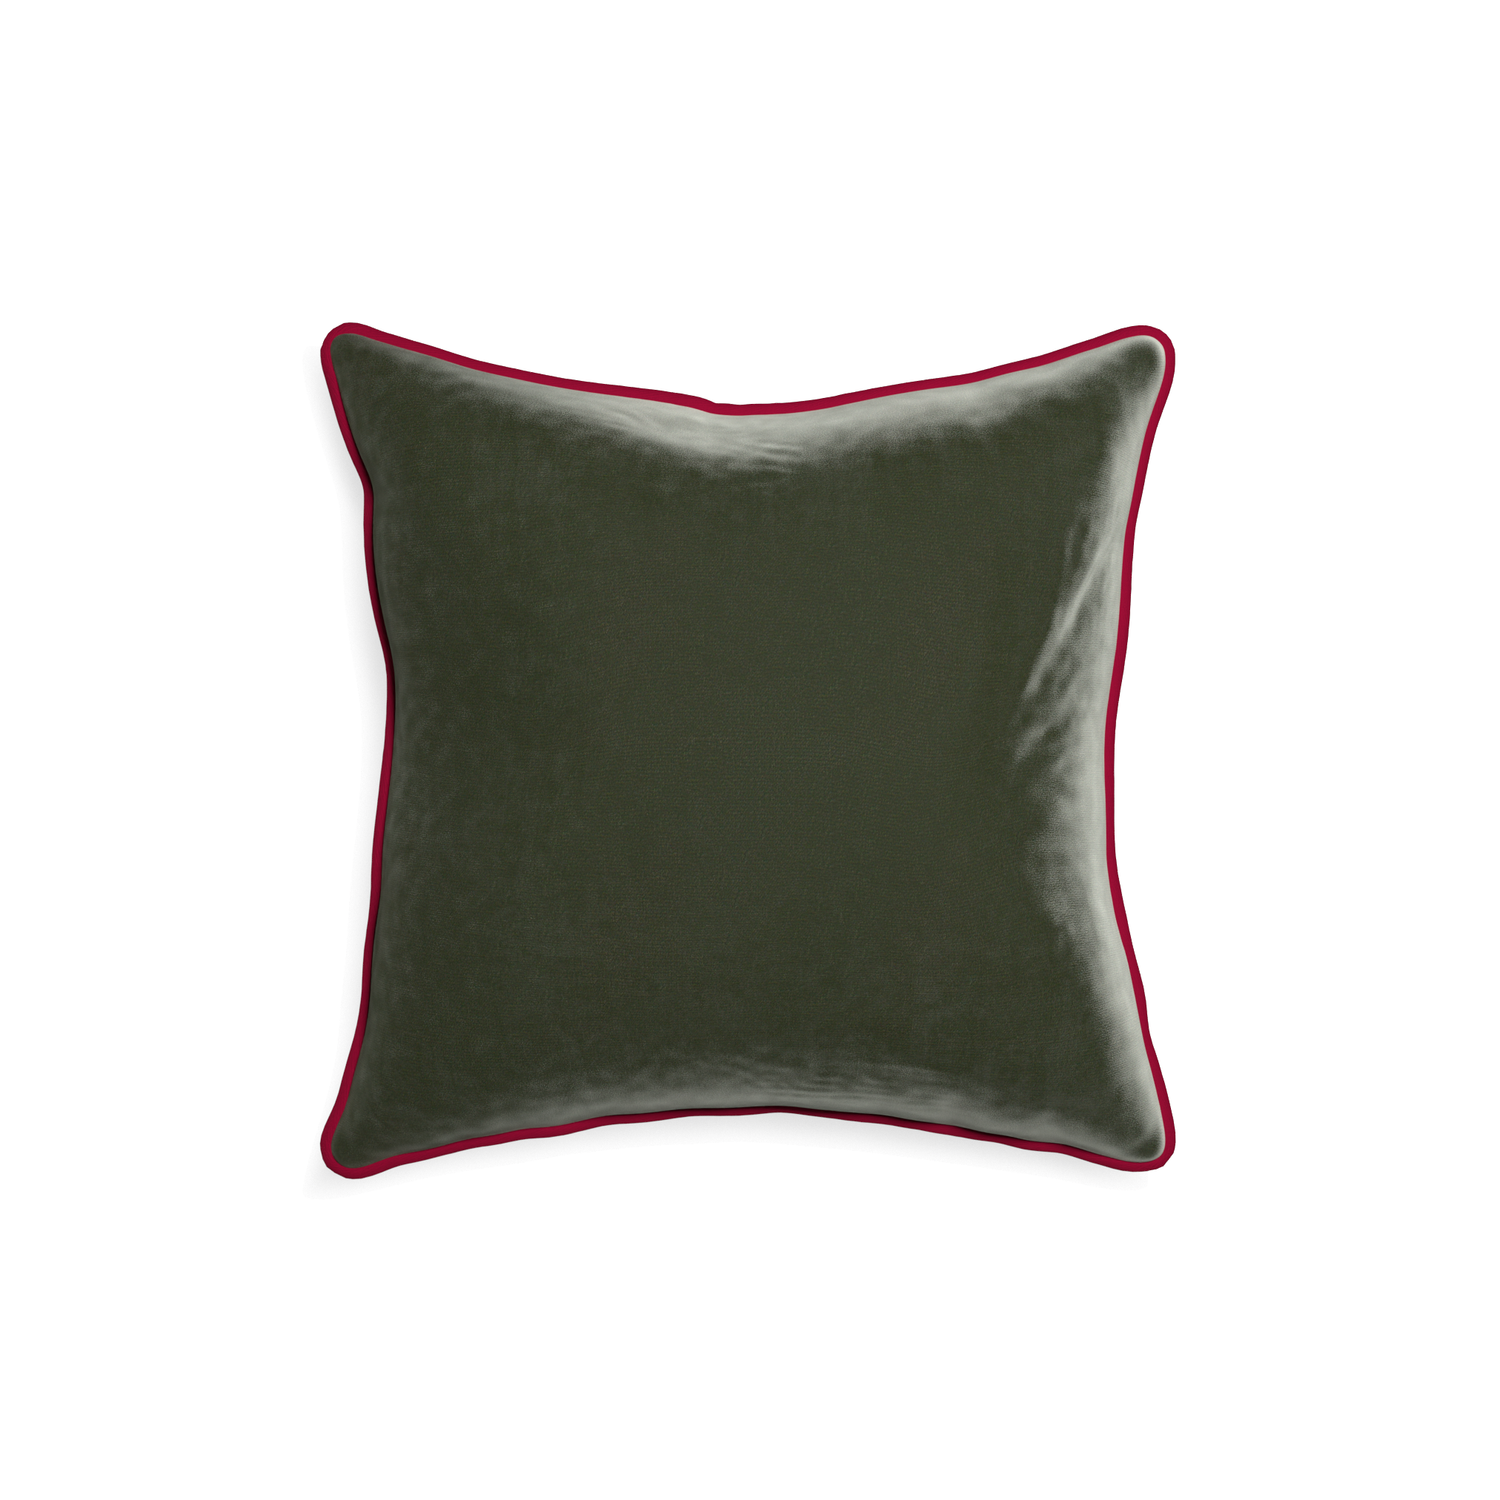 18-square fern velvet custom pillow with raspberry piping on white background